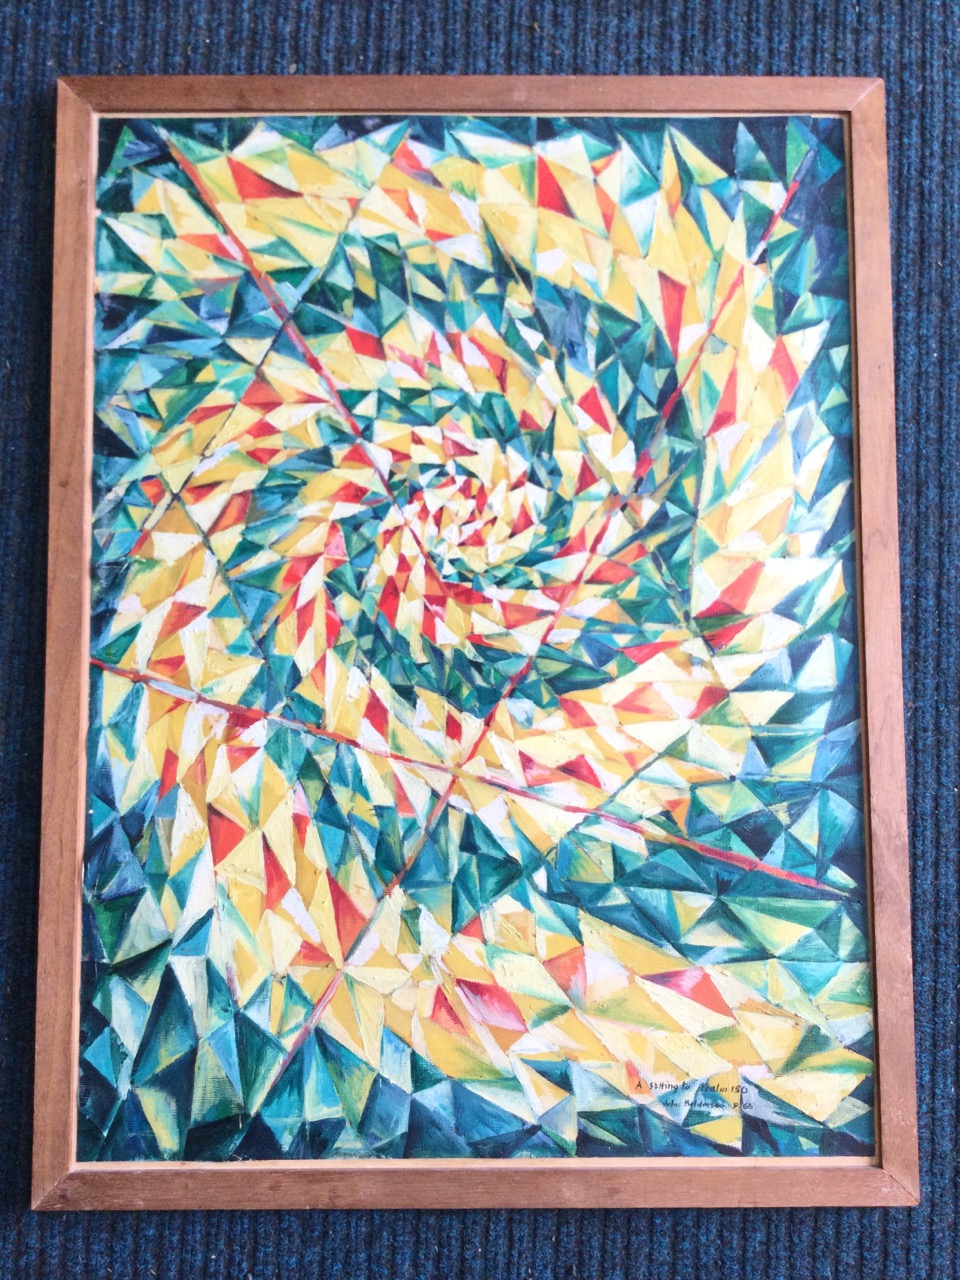 John Balderson, acrylic on canvas paper, abstract spiral composition, probably a design for